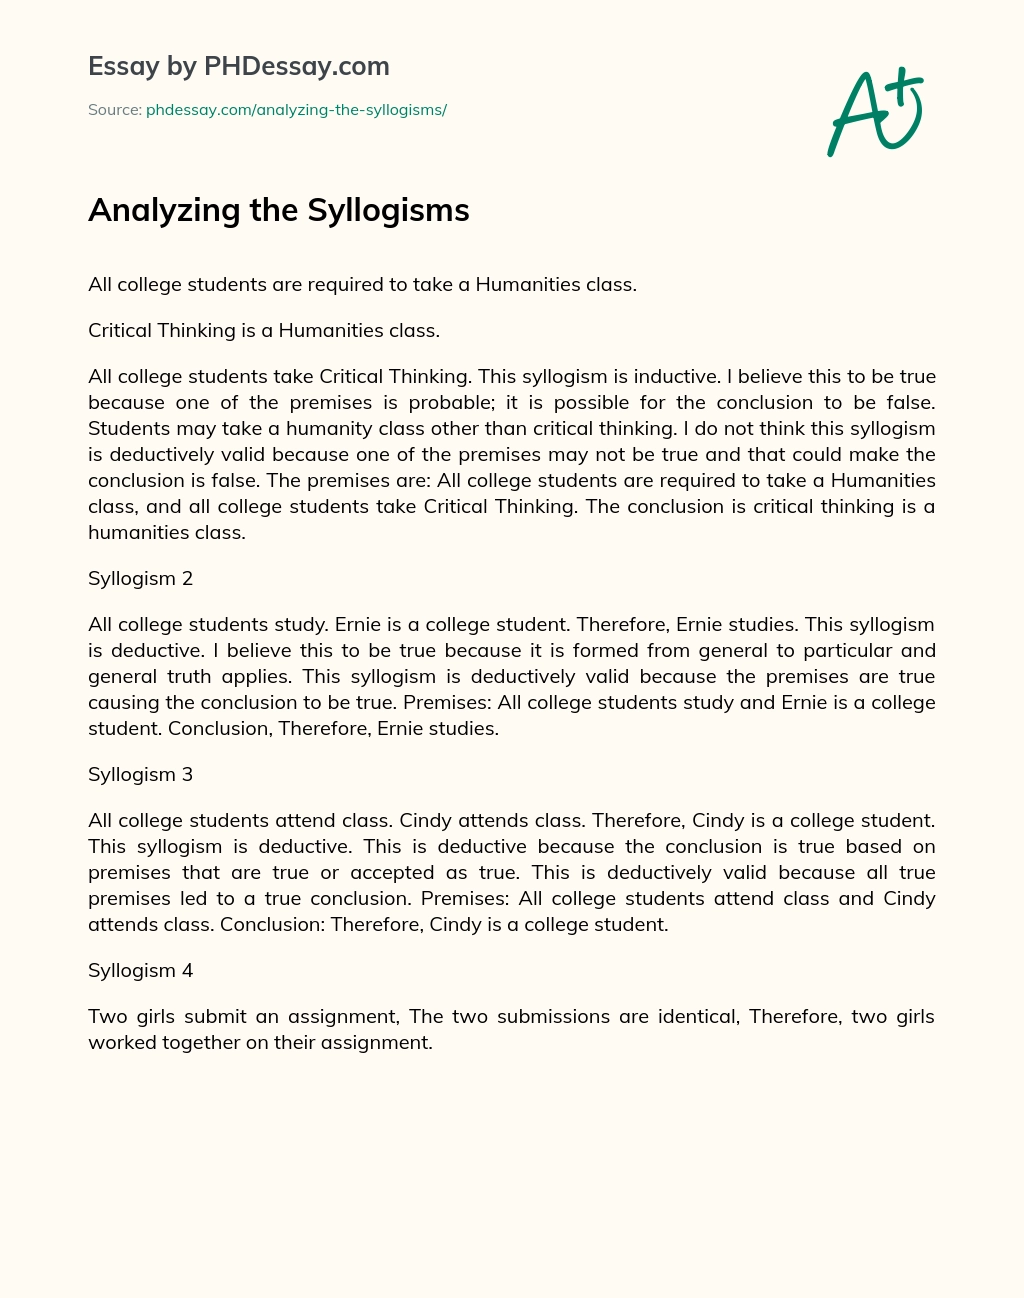 Analyzing the Syllogisms essay